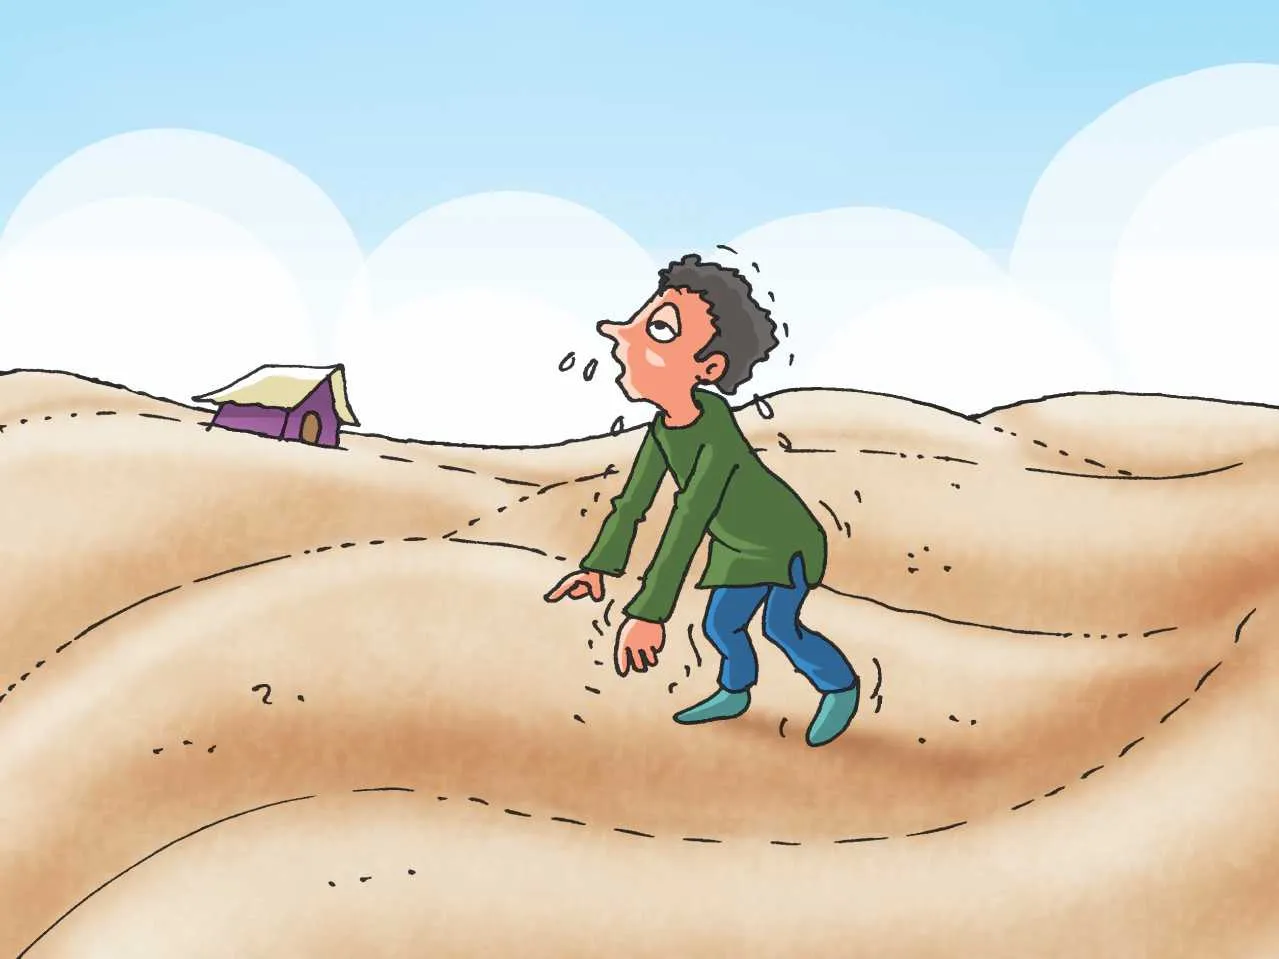 Man in Desert cartoon image